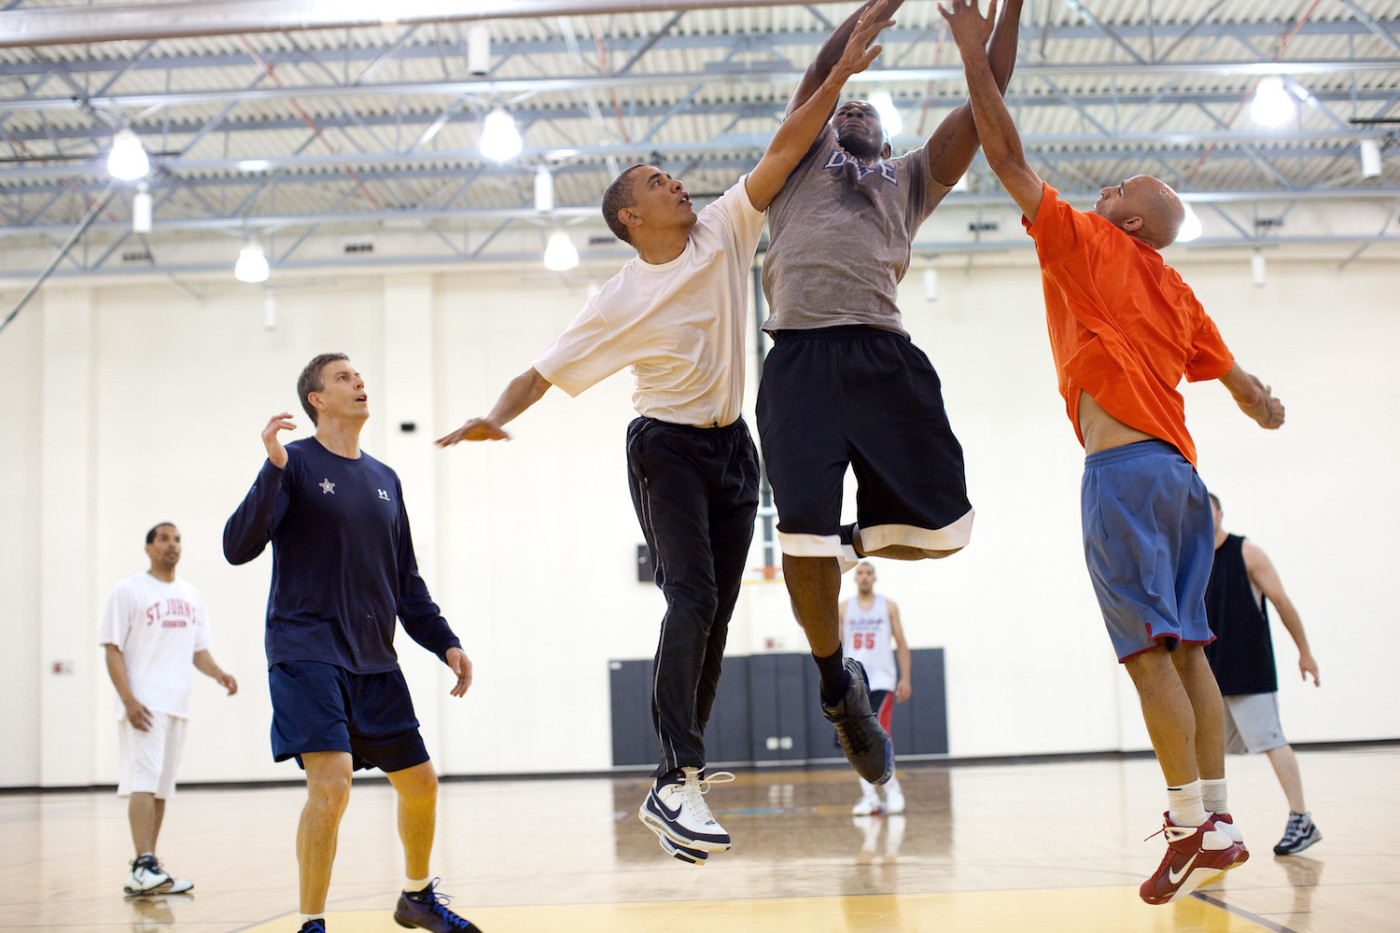 President Obama playing basketball